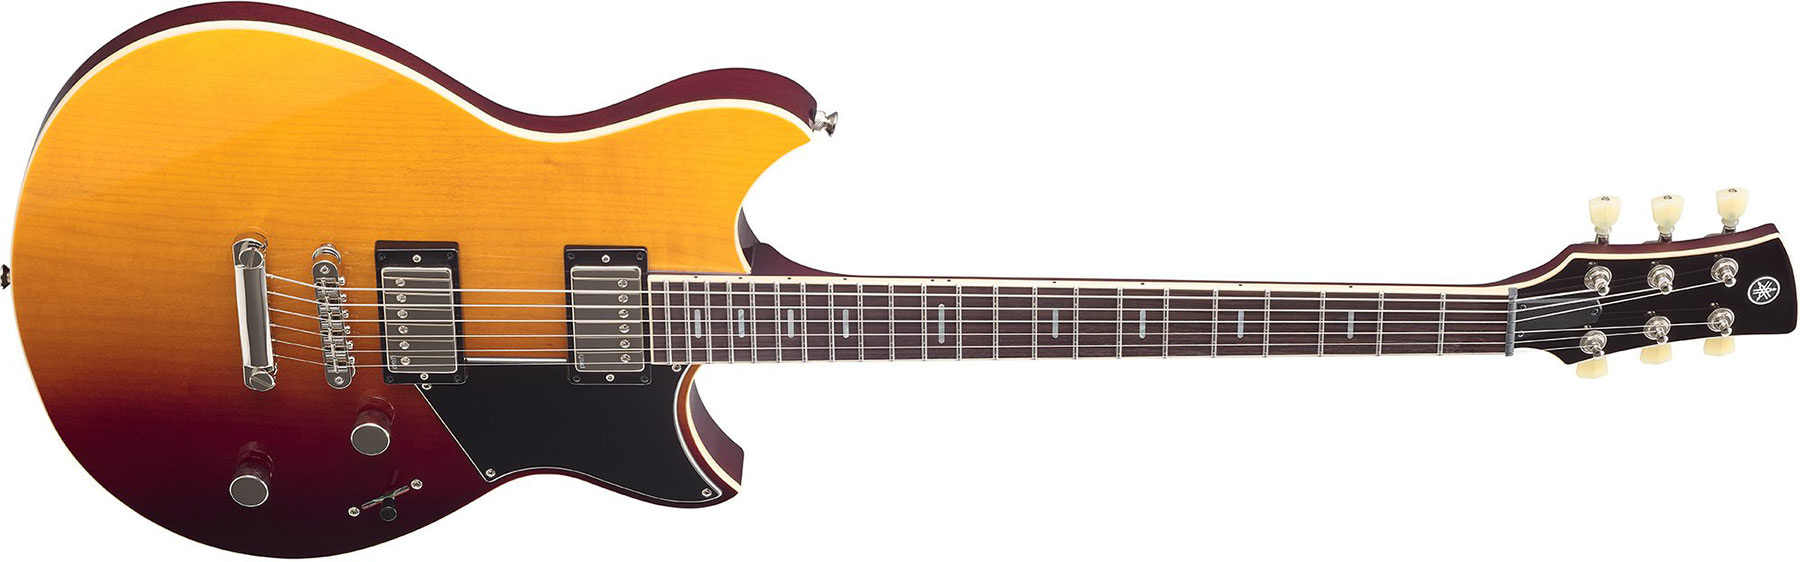 Yamaha Rss20 Revstar Standard Hh Ht Rw - Sunset Sunburst - Guitarra eléctrica de doble corte. - Variation 1